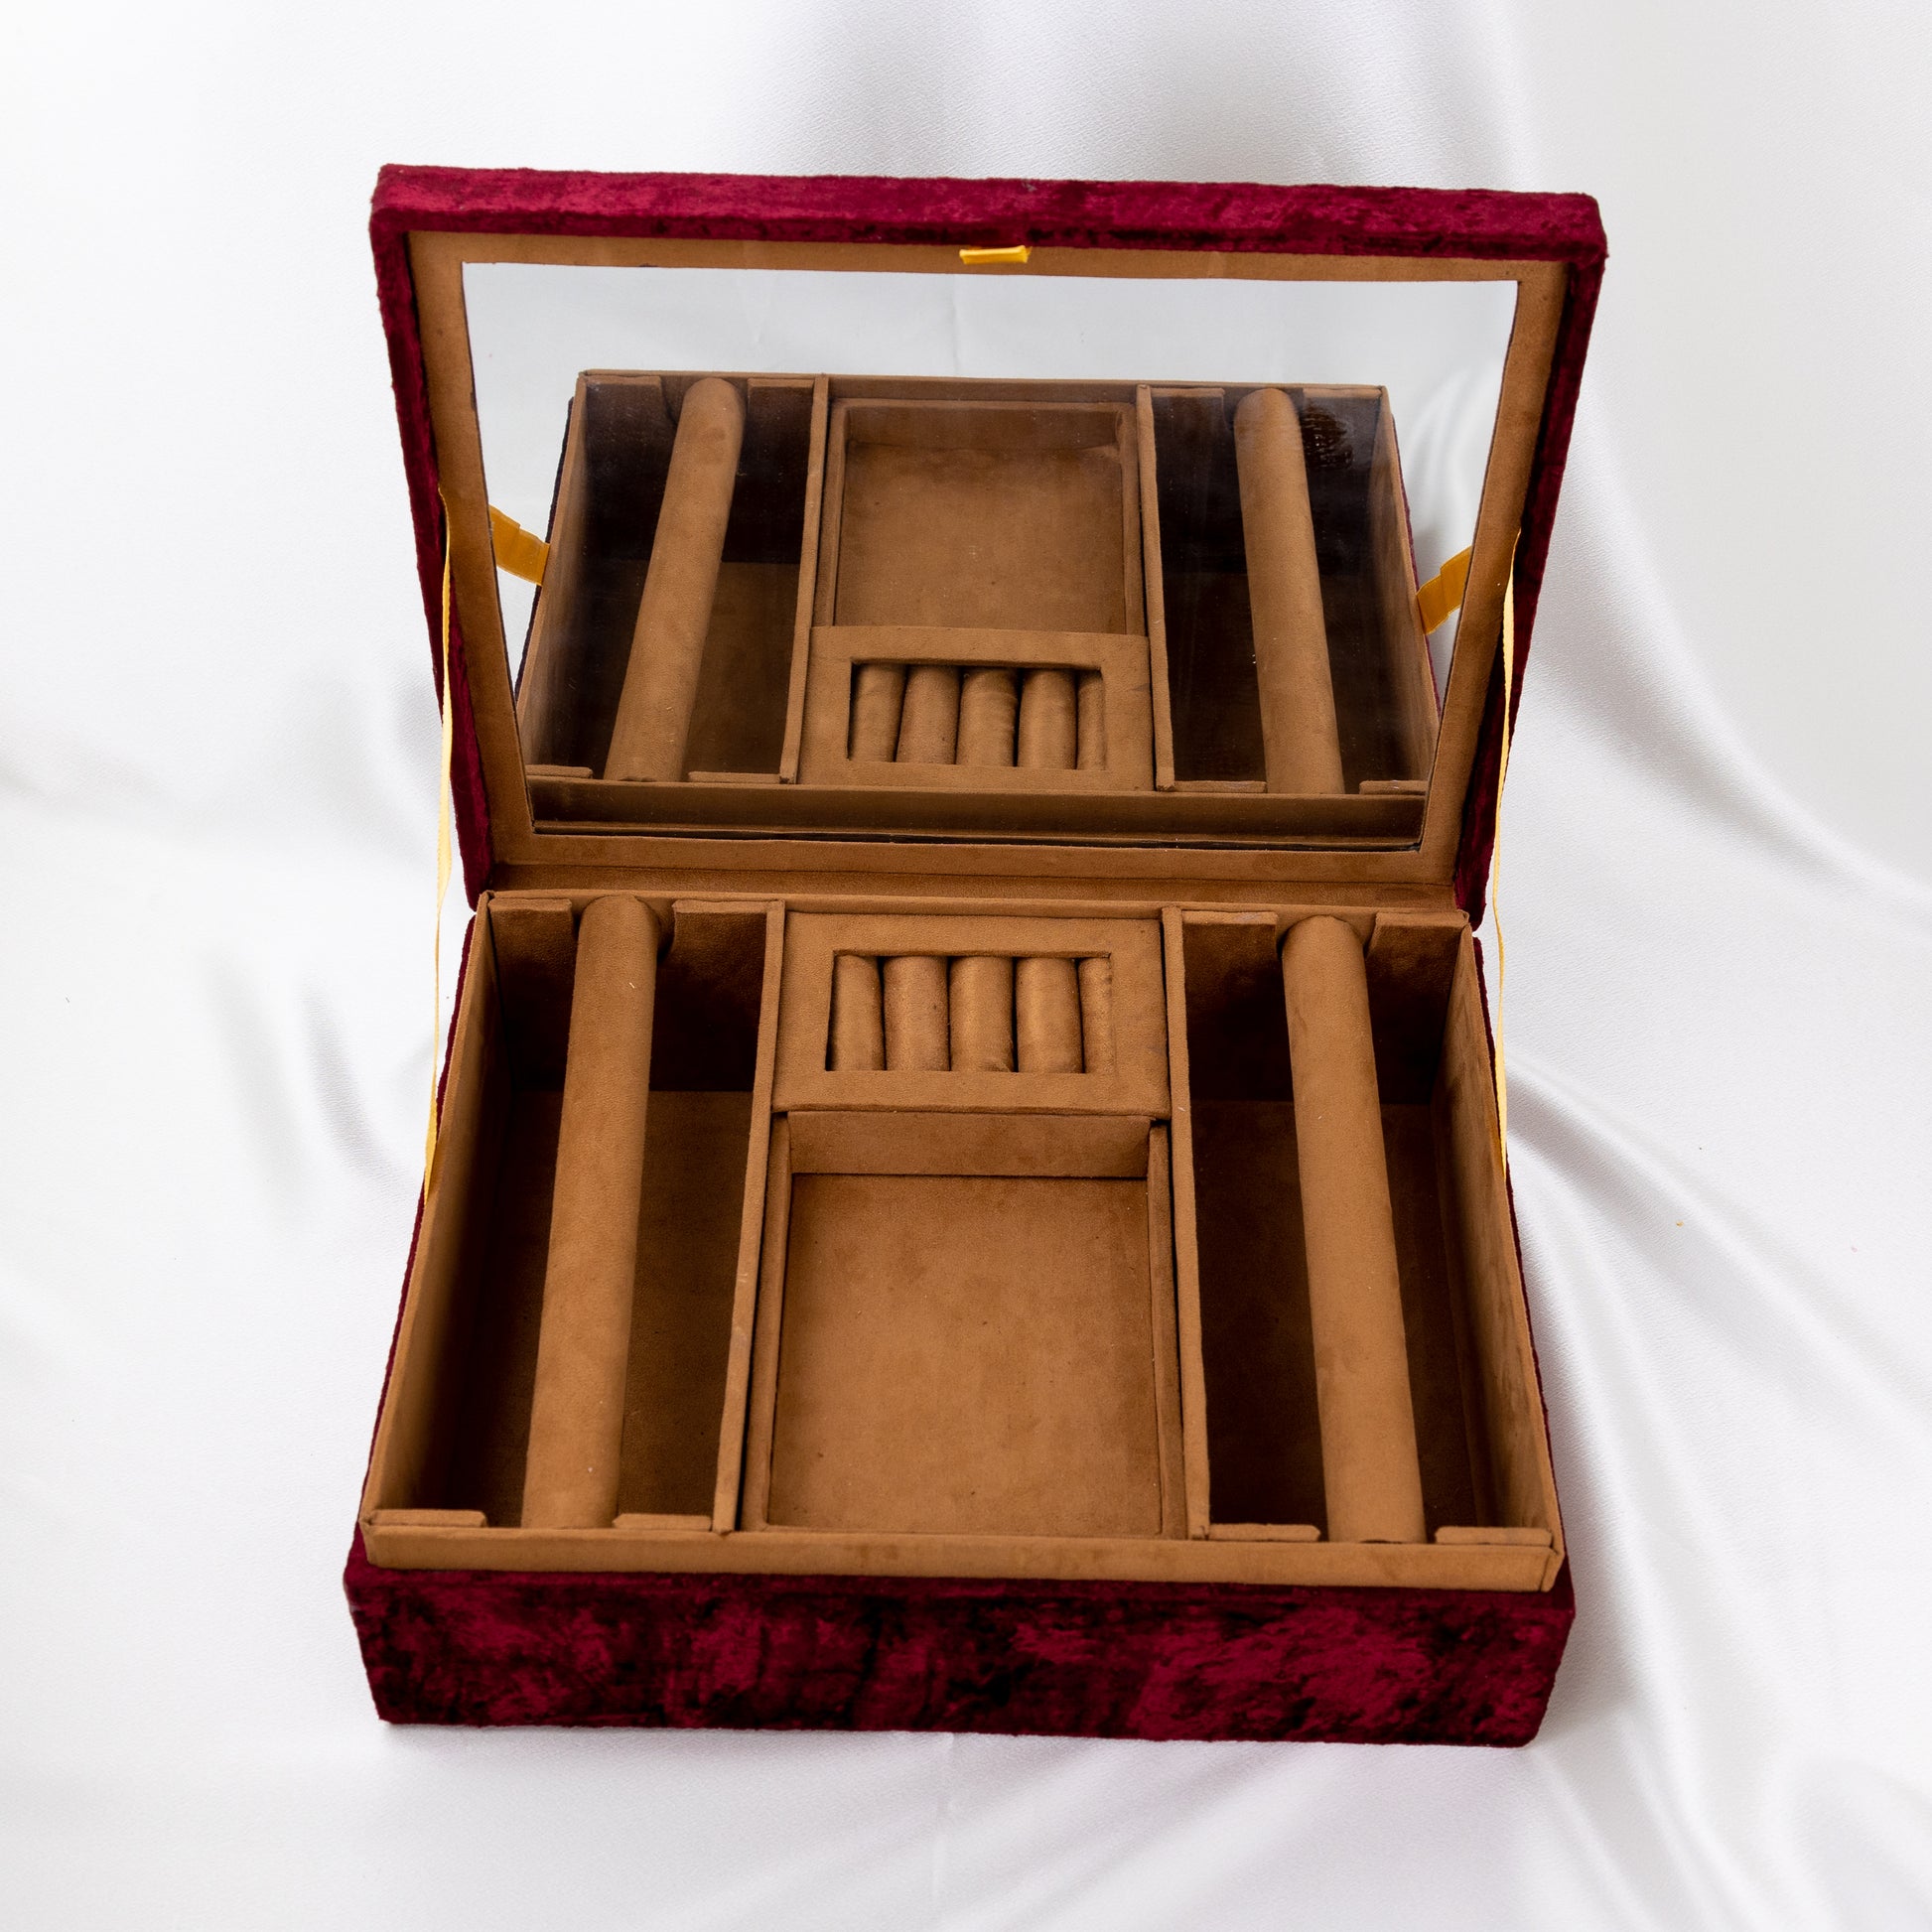 Bridal trousseau box, large hand embroidered floral wedding keepsake box,  OOAK statement jewelry box, heirloom decorative box, memento box